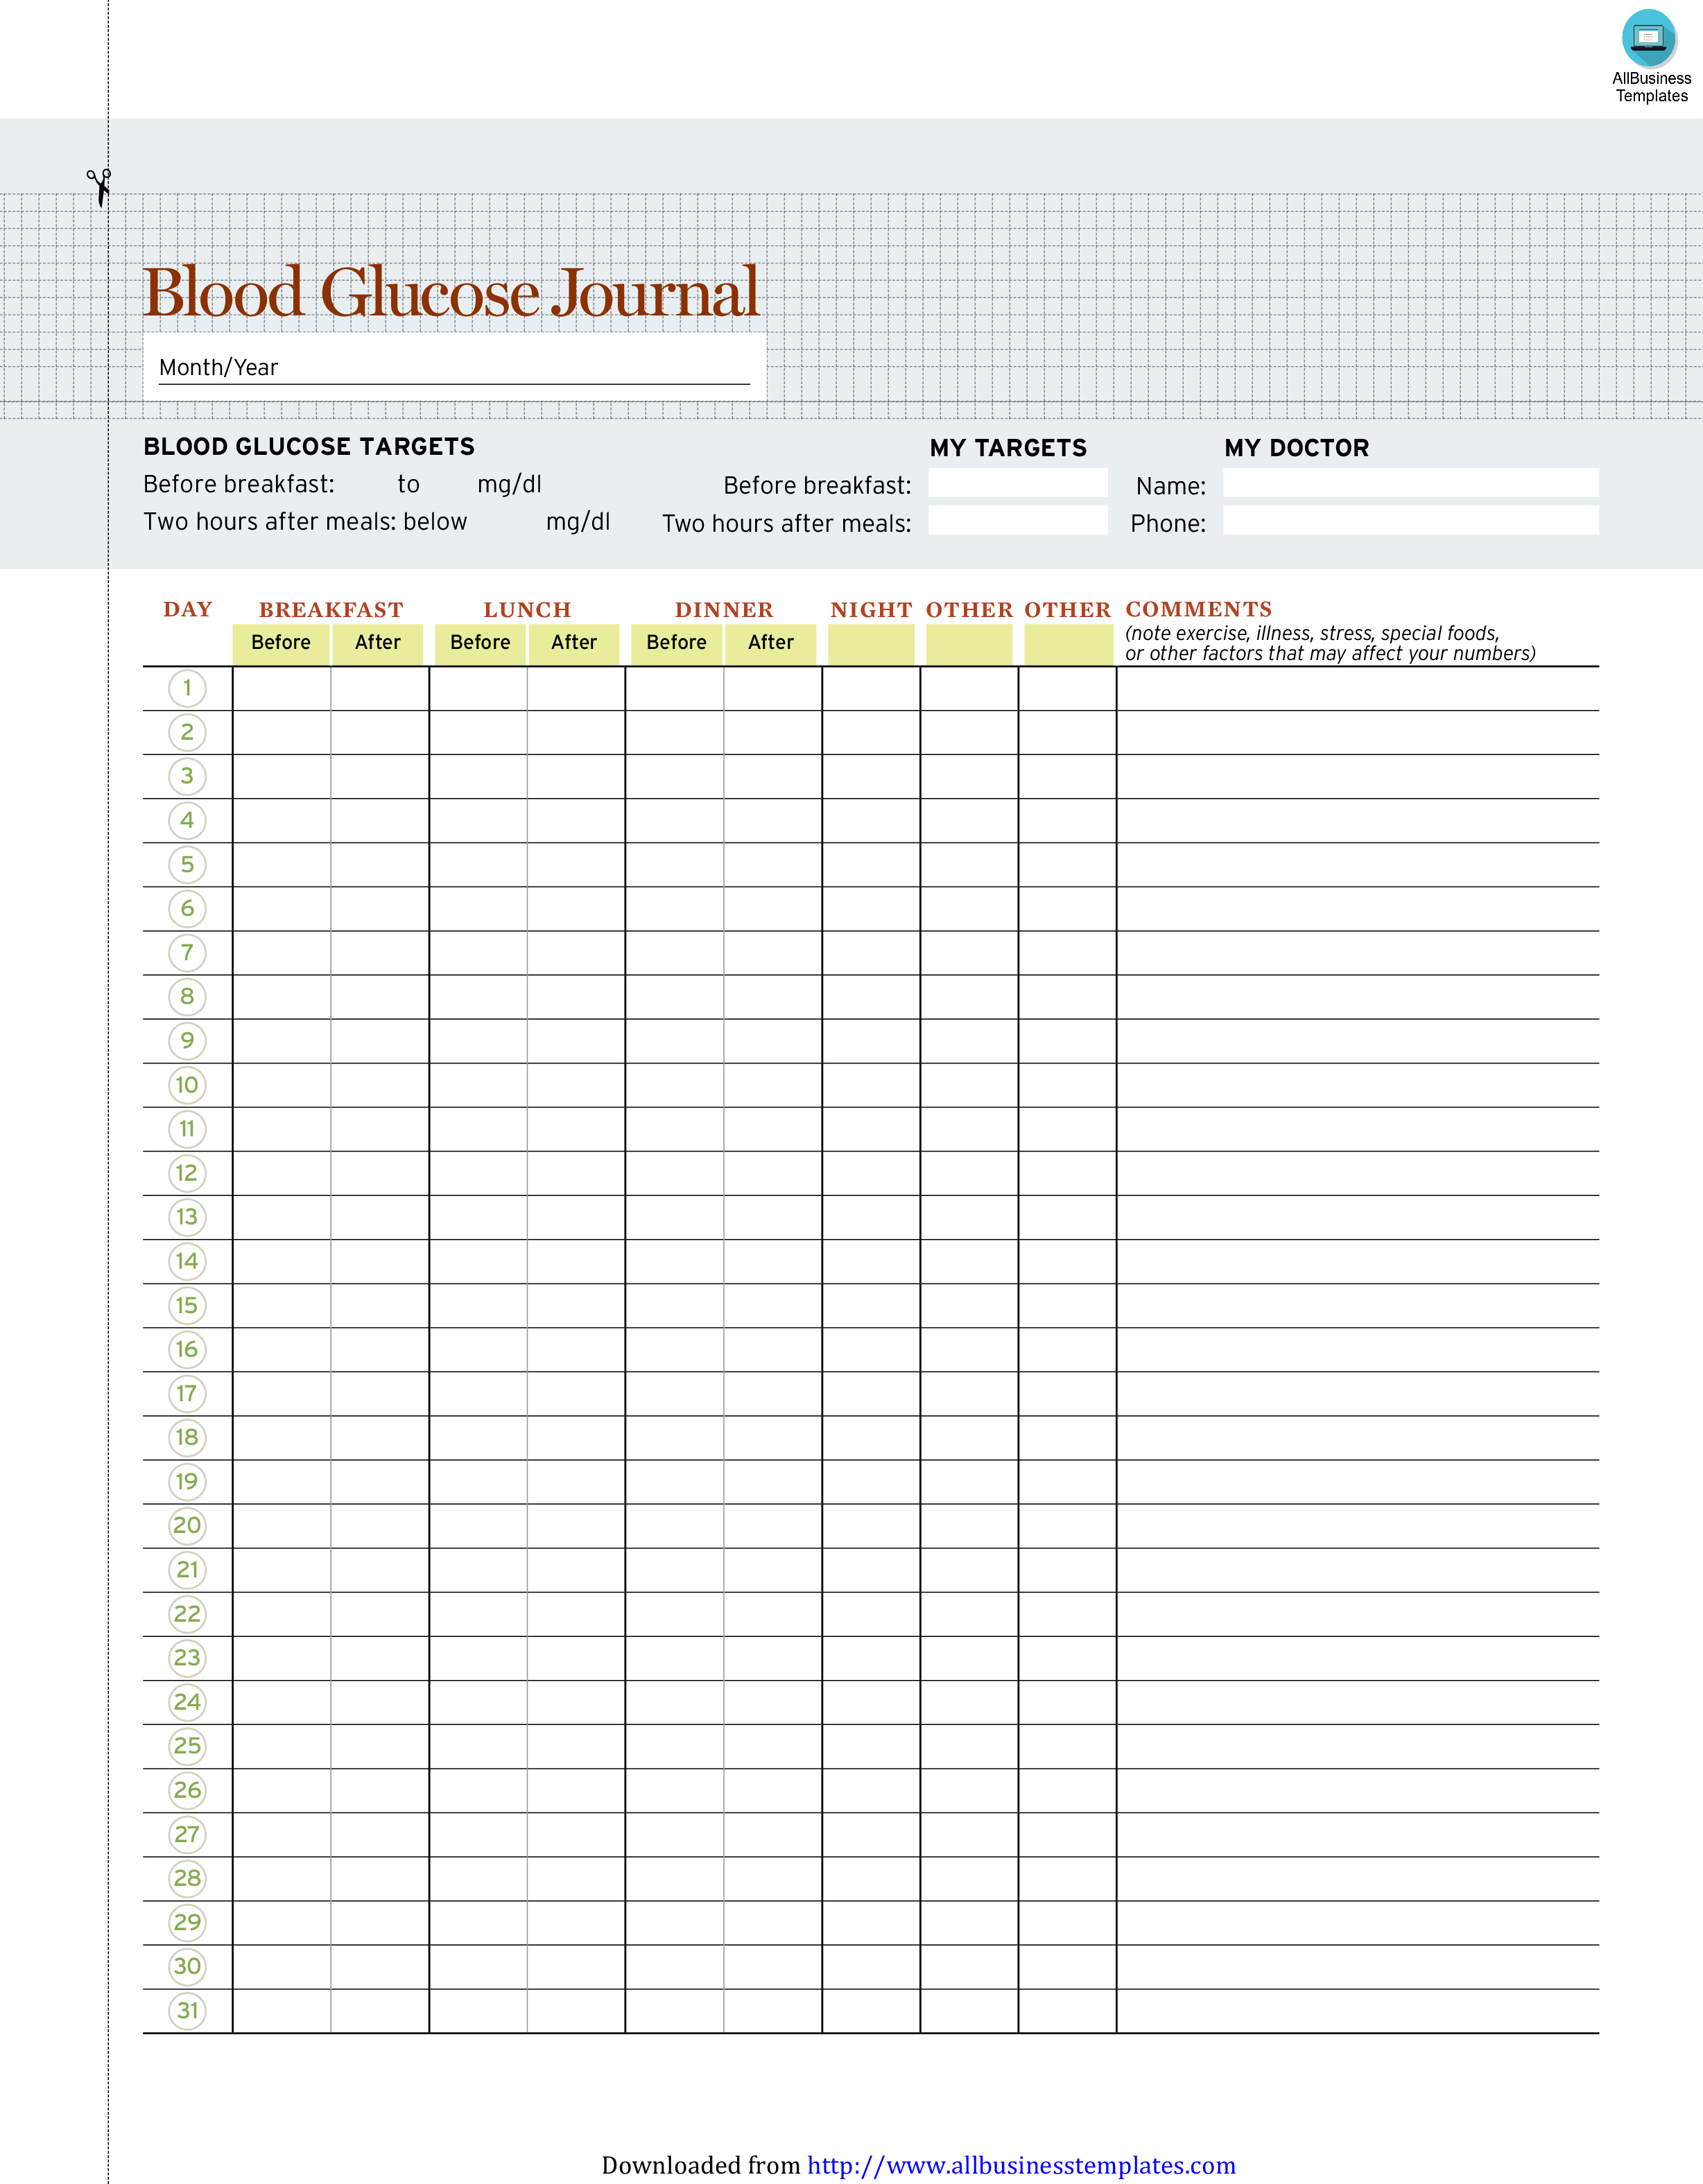 Blood Glucose Journal main image